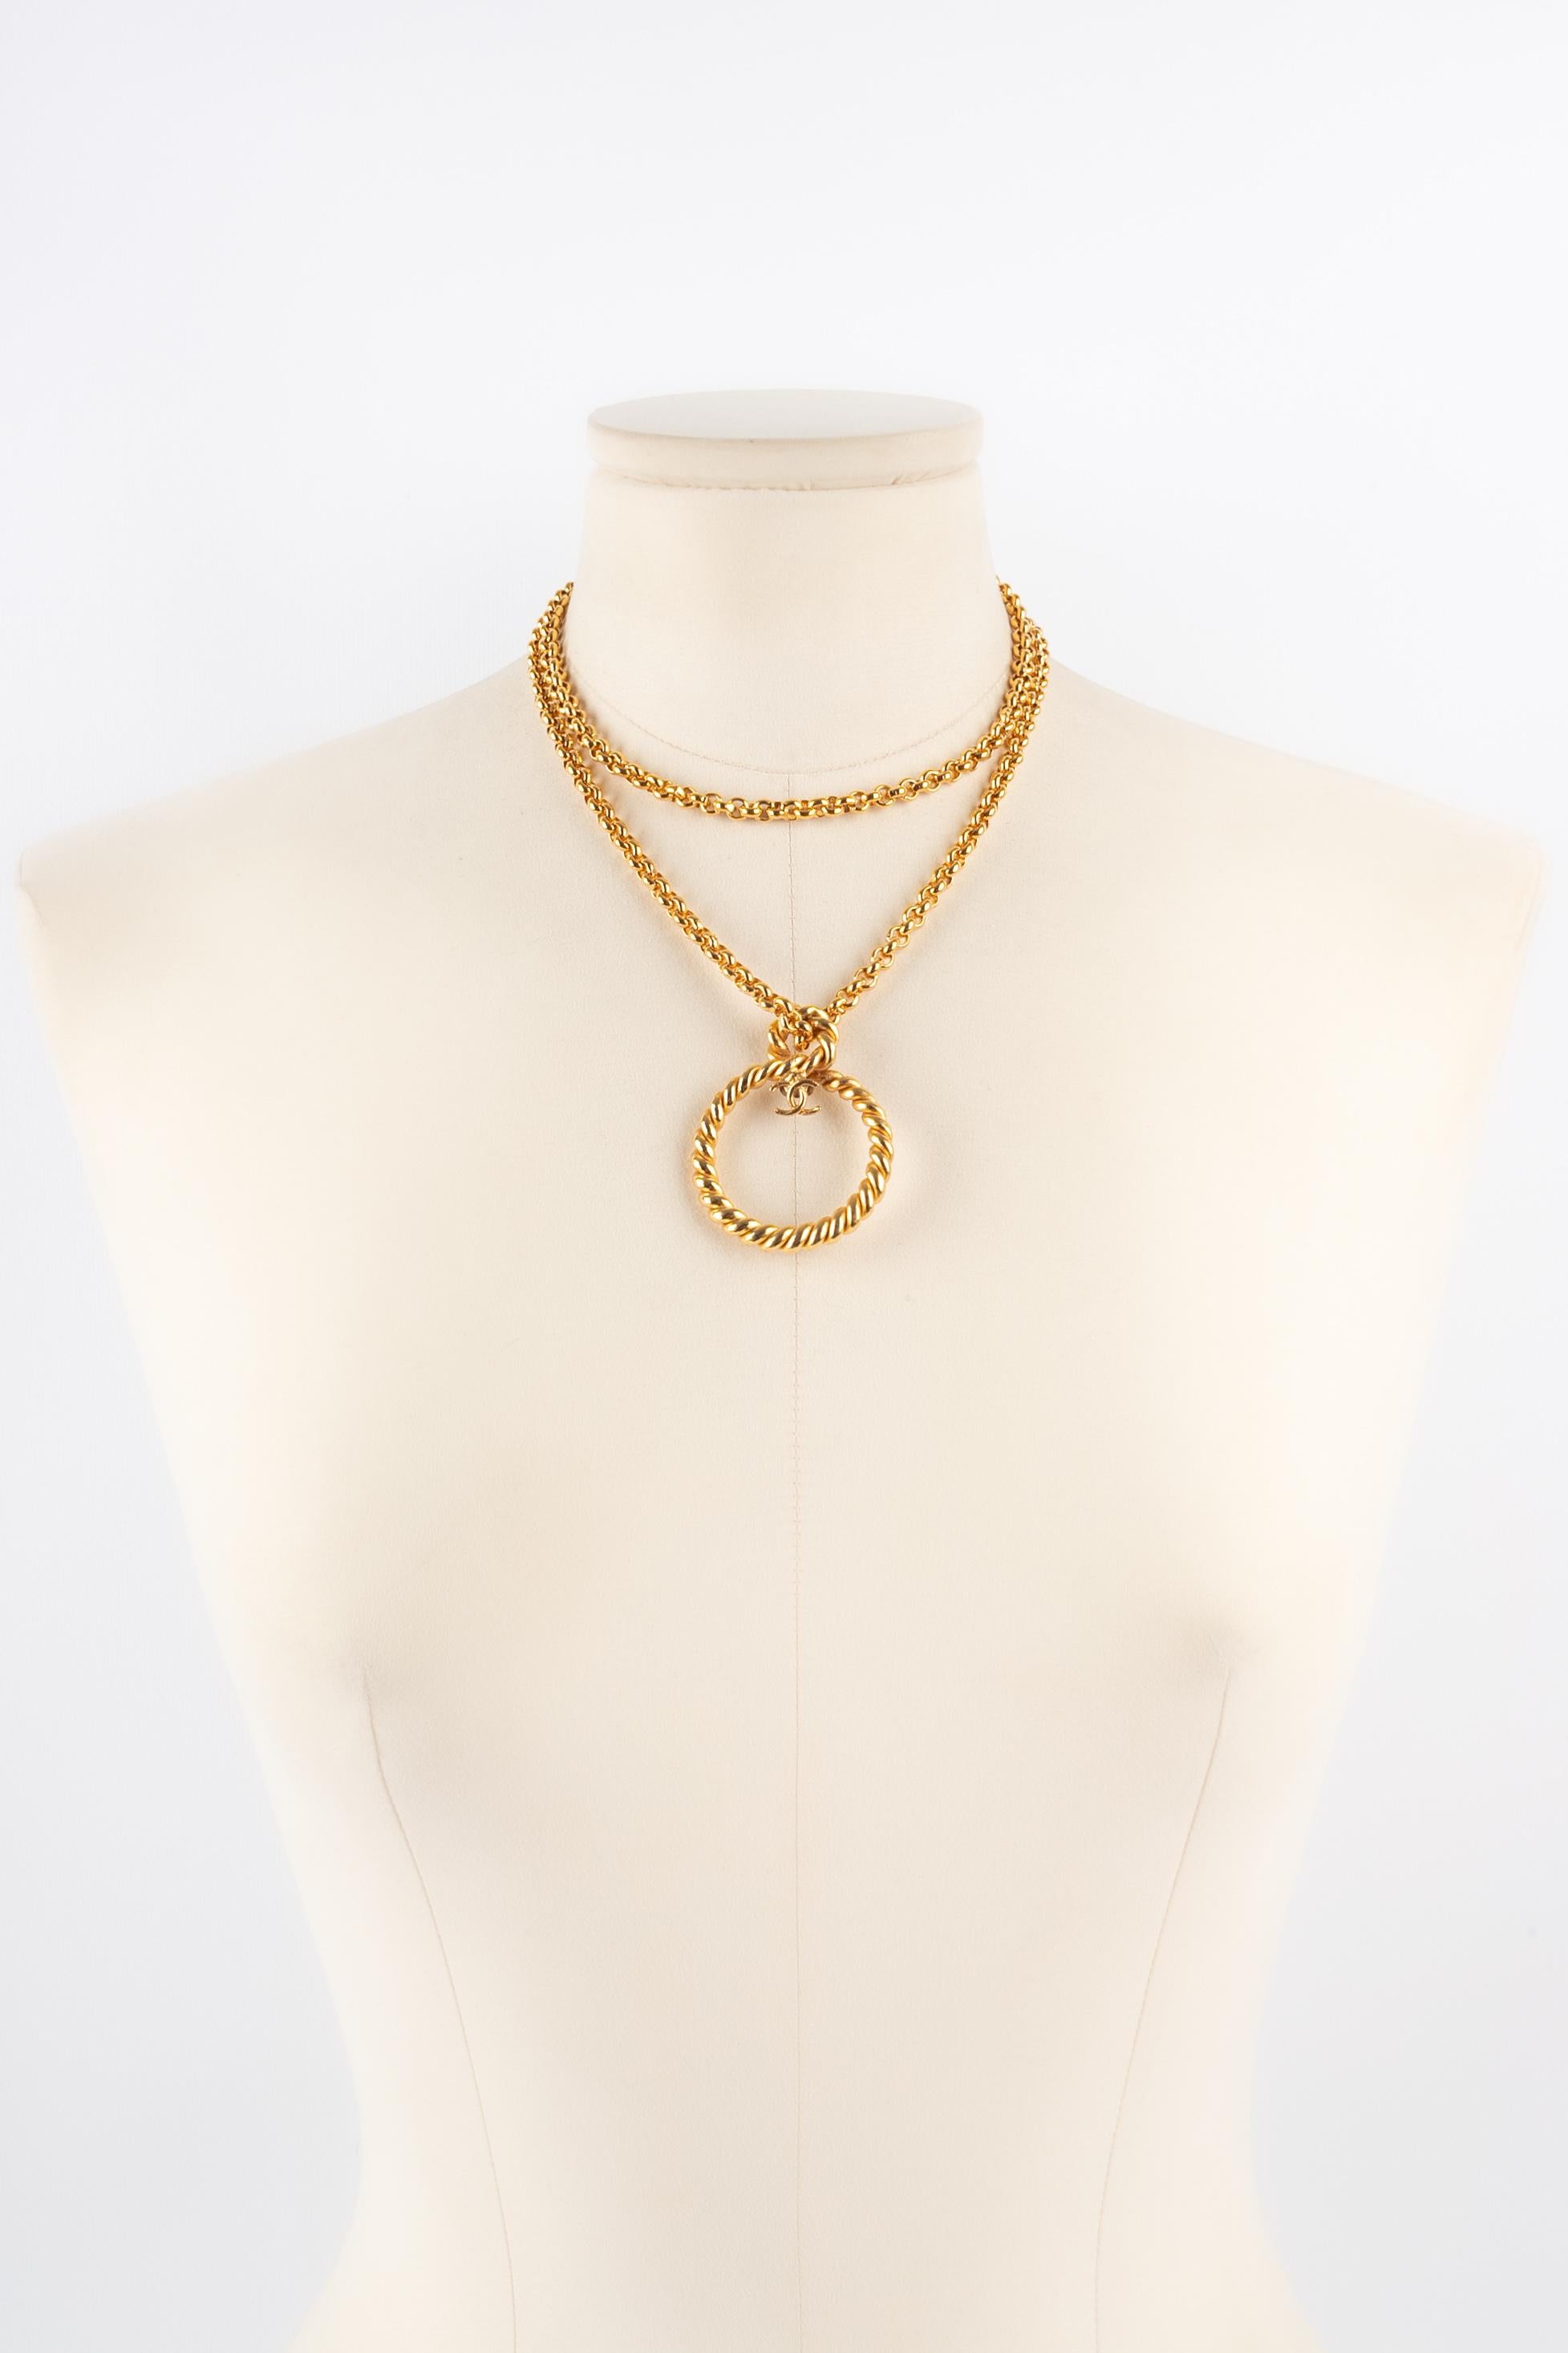 Chanel pendant necklace For Sale 4